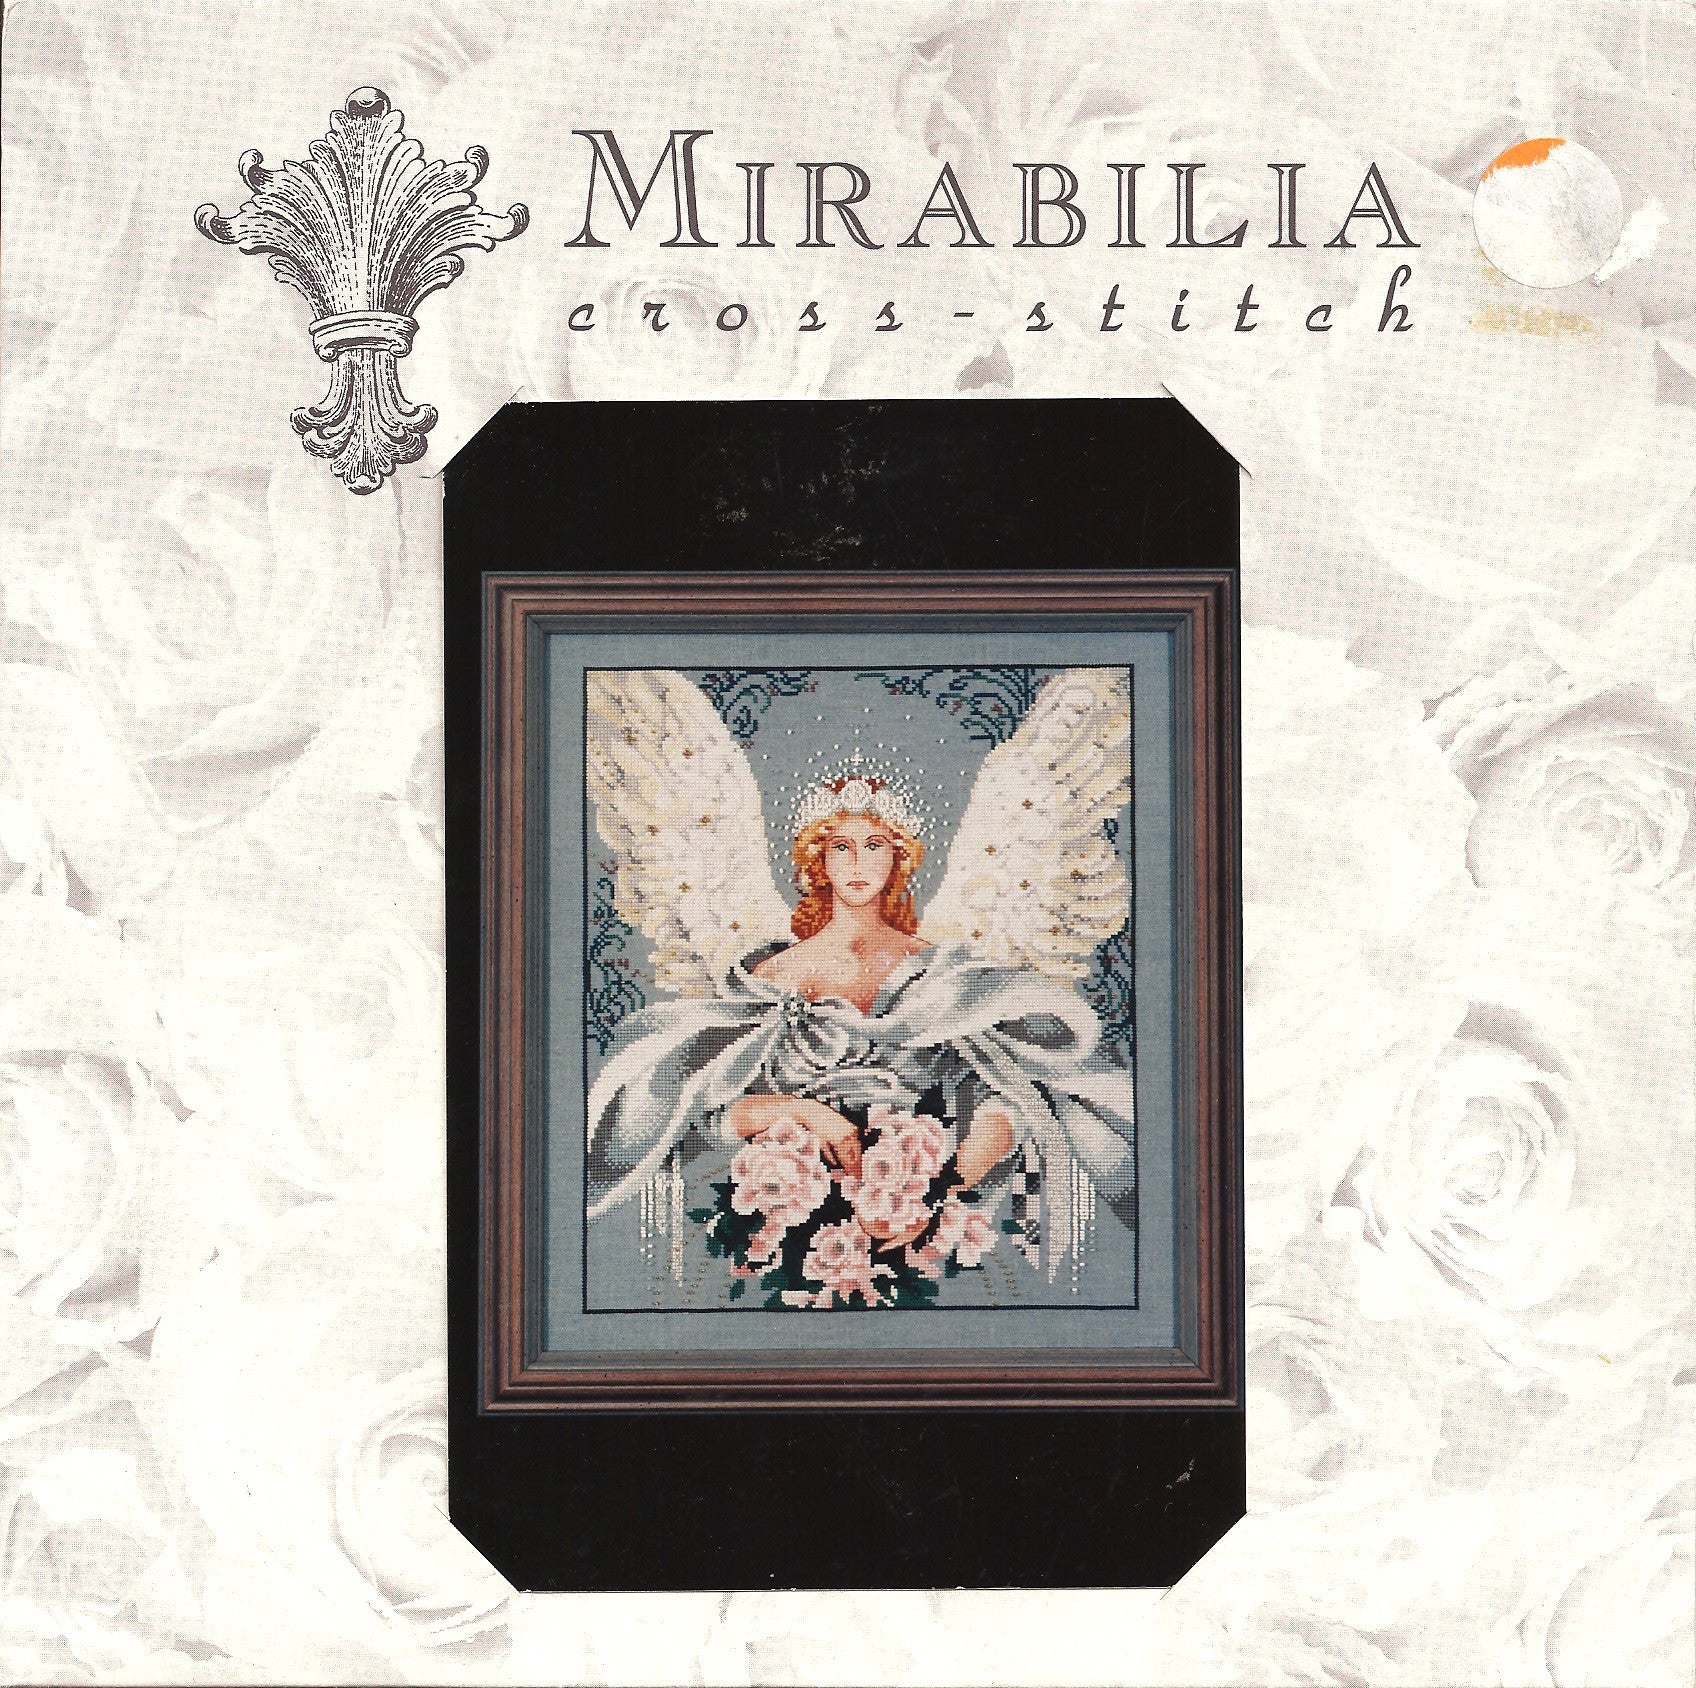 Mirabilia Millennium Angel md27 cross stitch pattern